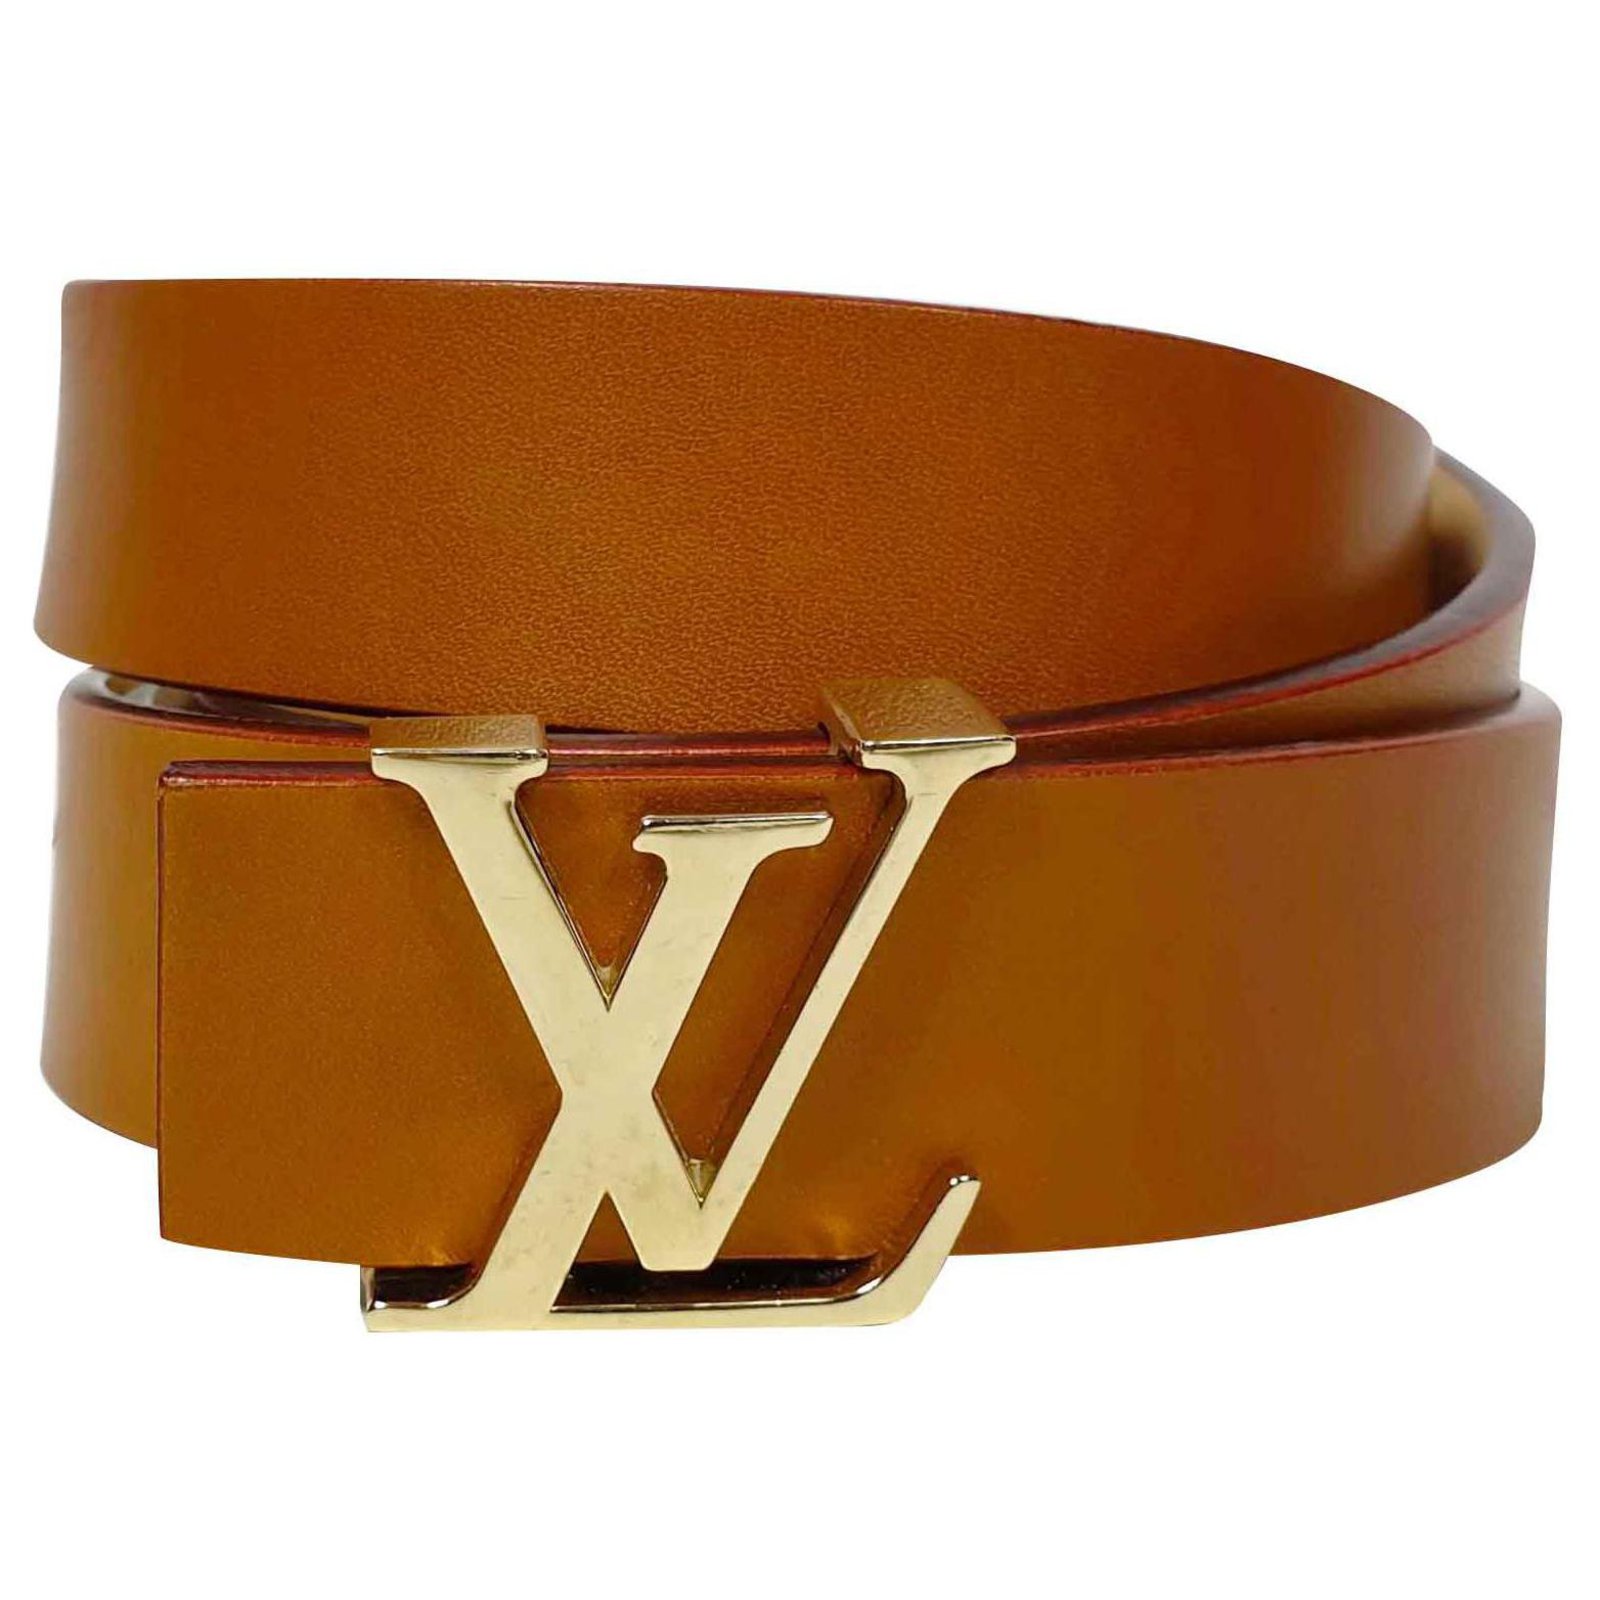 Lv Belt  Buy Louis Vuitton Belt For Men  Delhi India  Dilli Bazar